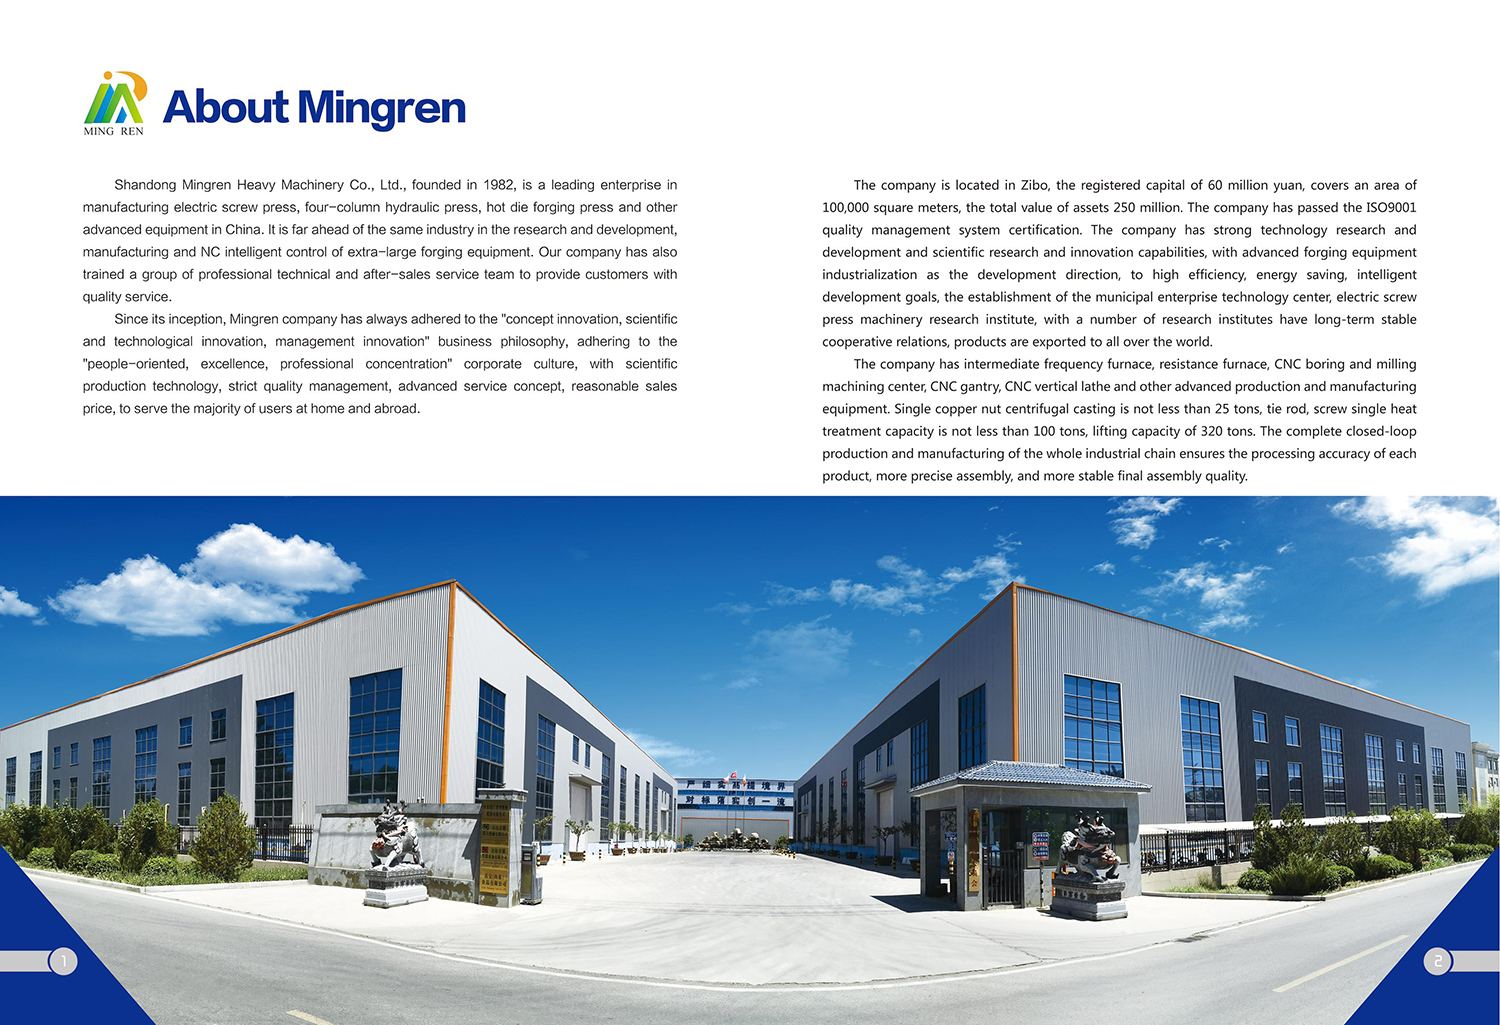 Shandong Mingren Heavy Machinery Co., Ltd Catalog4